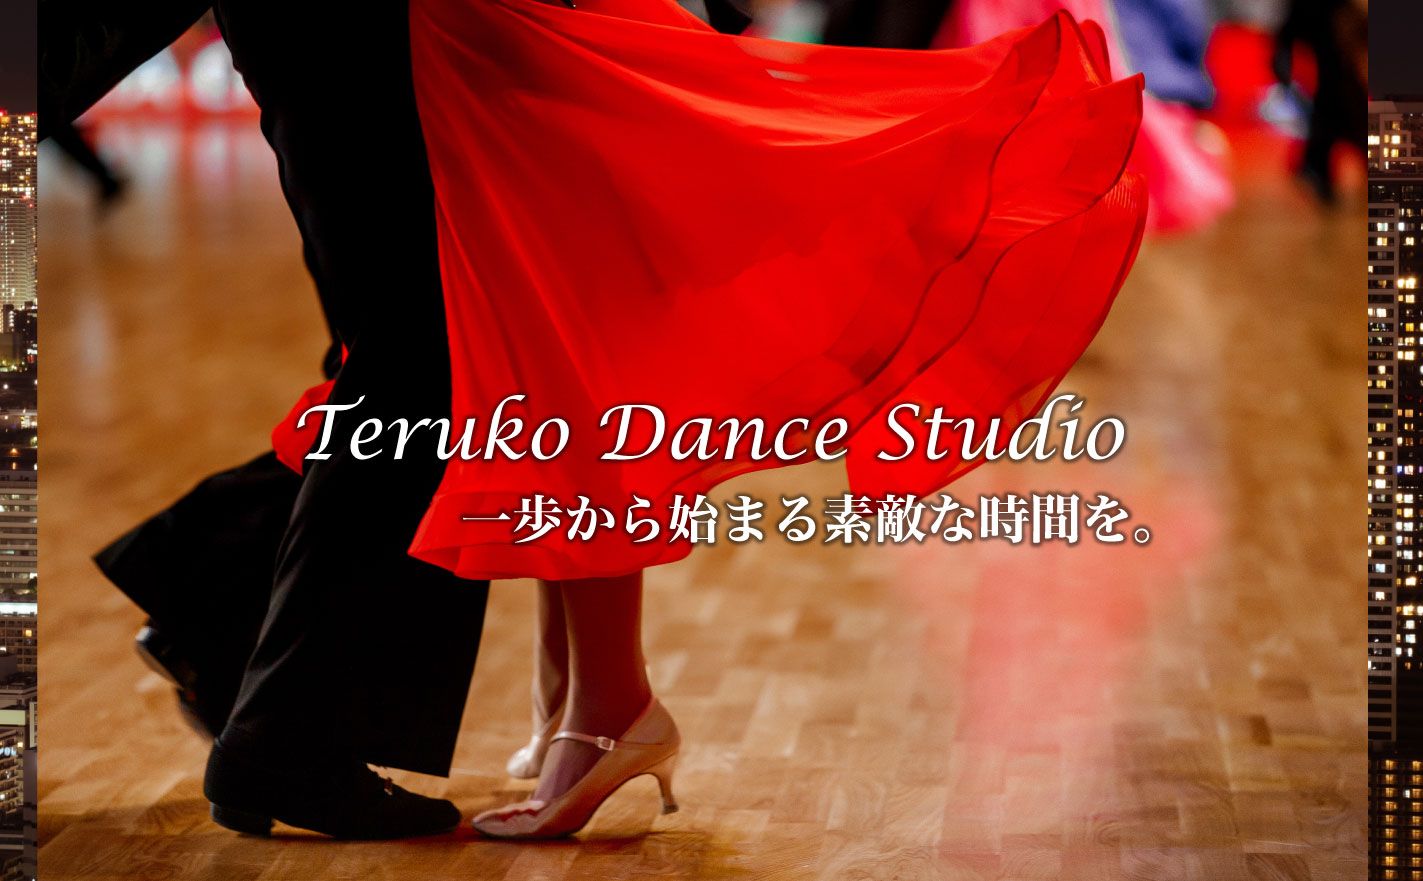 Teruko Dance Studio 一歩から始まる素敵な時間を